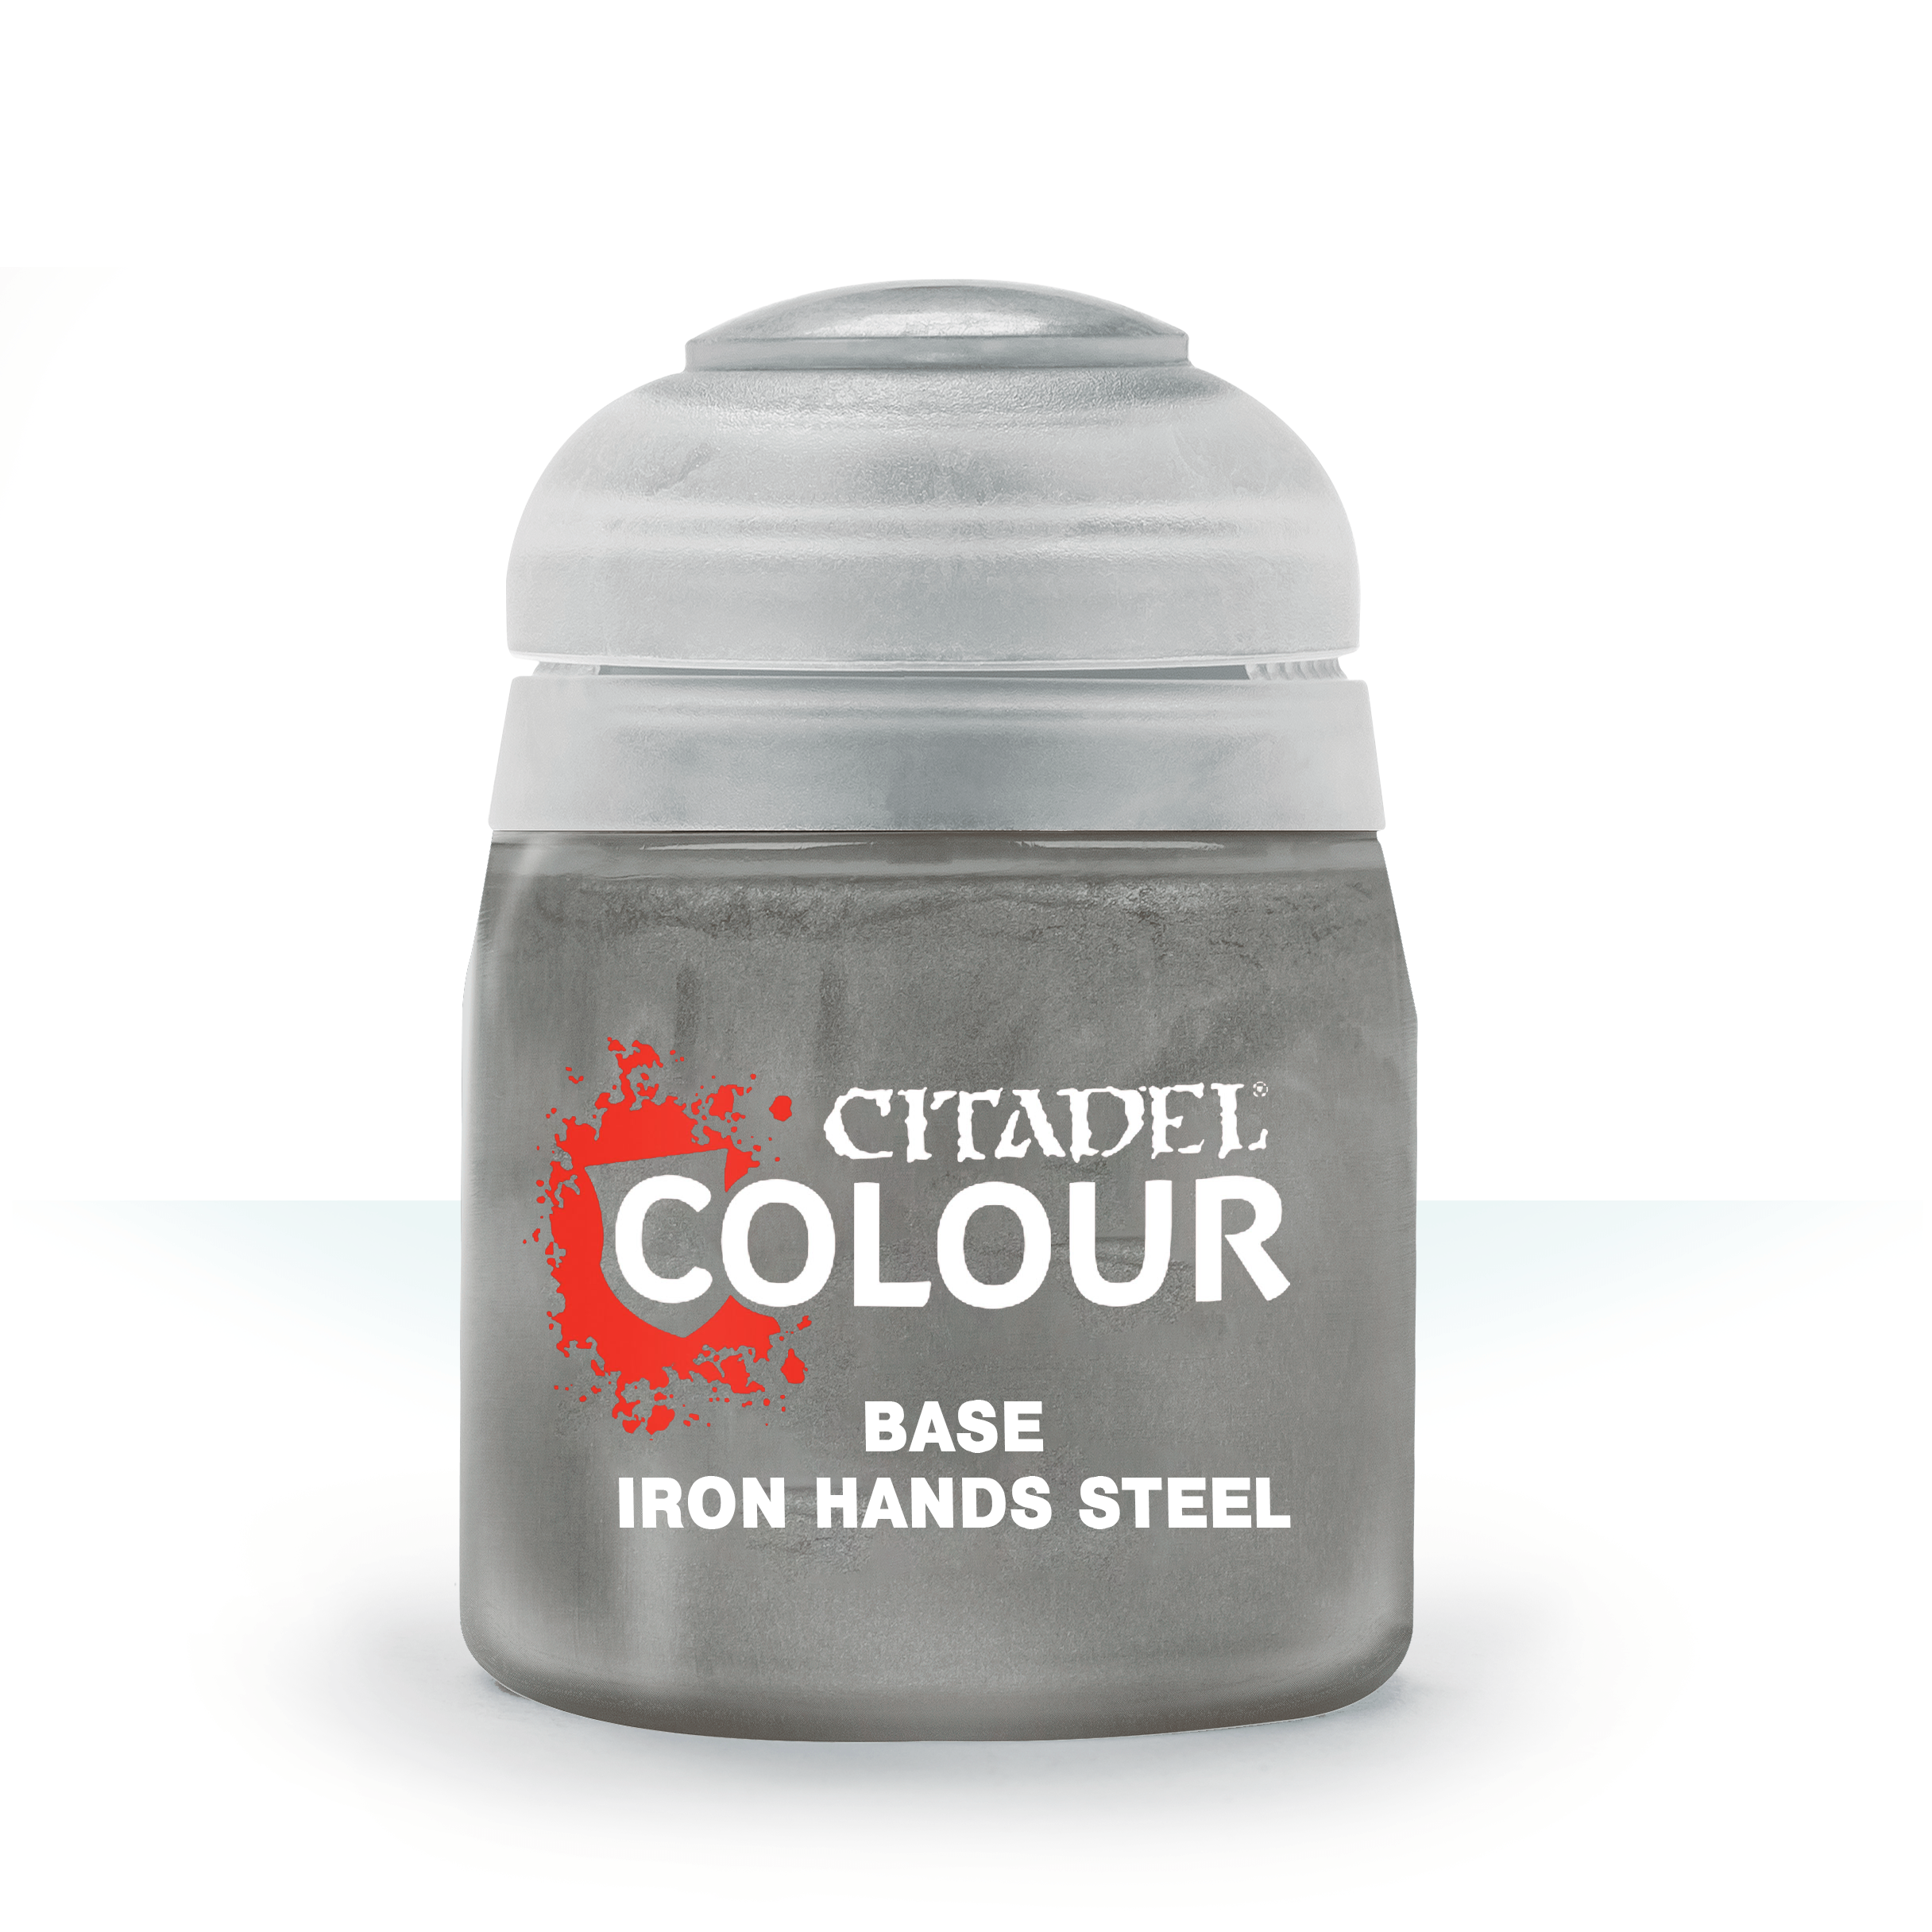 Base: Iron Hands Steel